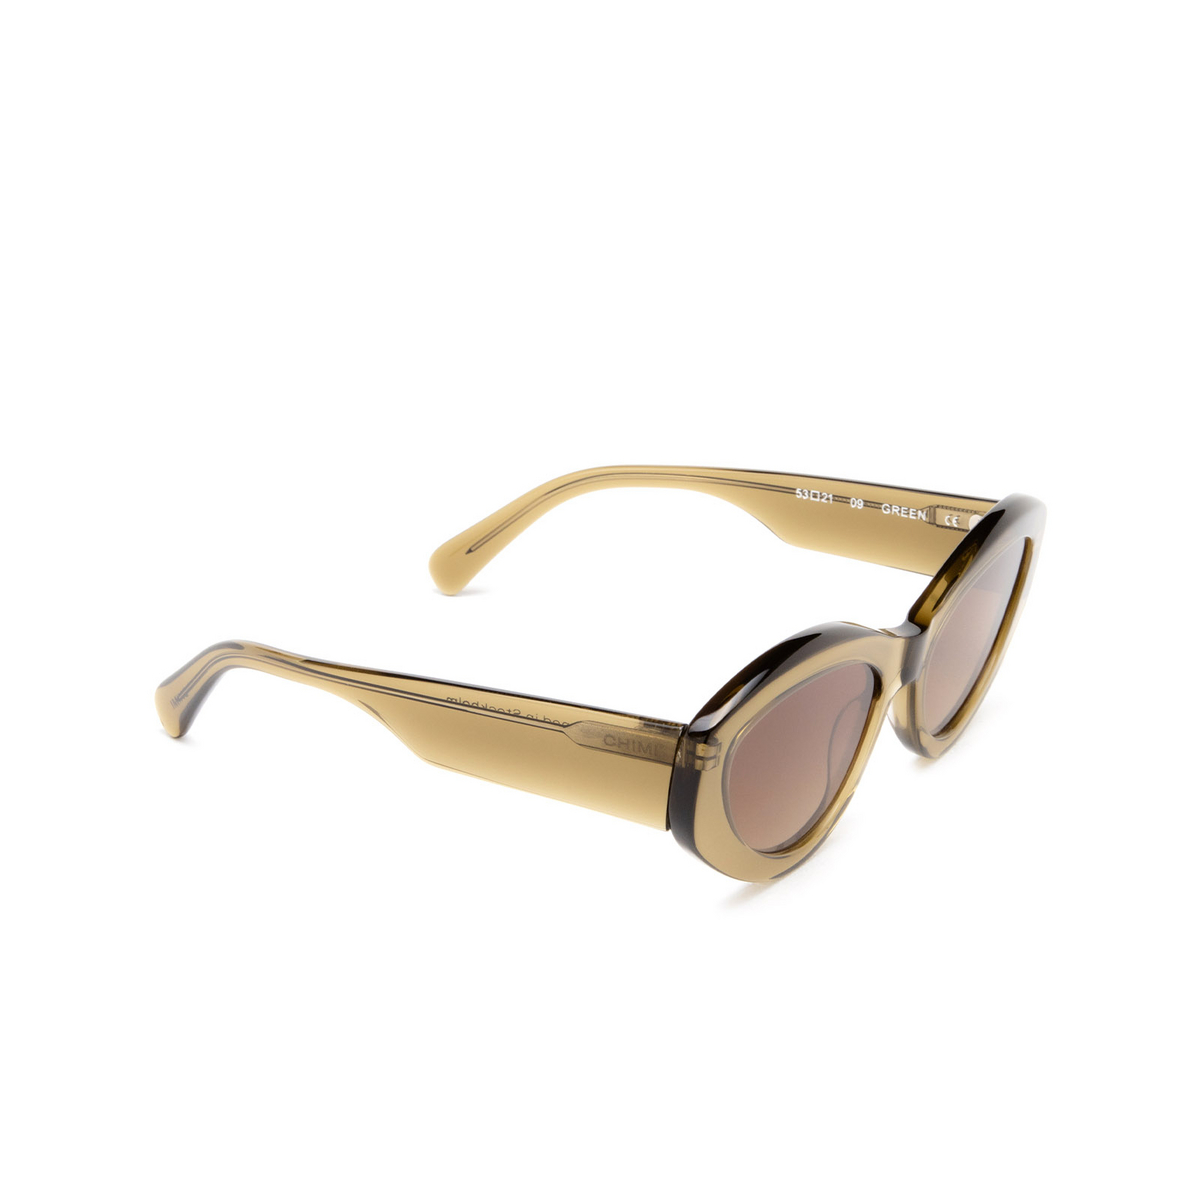 Chimi® Cat-eye Sunglasses: 09 color Green - three-quarters view